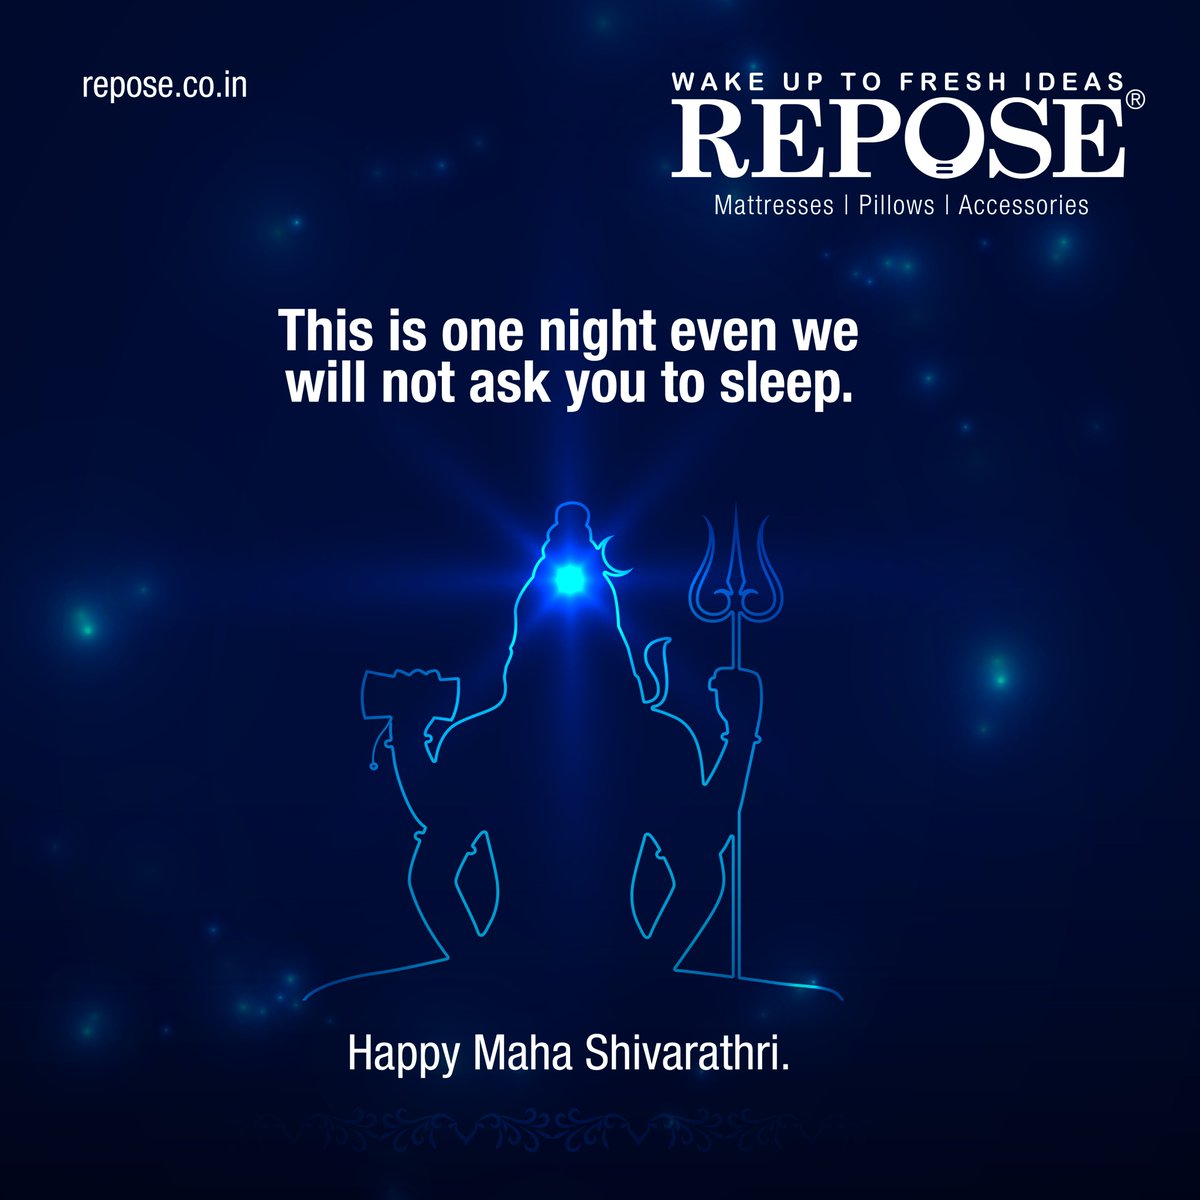 To shop click on the link in the BIO.
.
.
.
.
.
#lordshiva #shivarathri #MahaShivarathri #sound #breathe #tiredness #SleepPreferences #goodsleep #wakeupfresh #sleepexperience #reposeworld